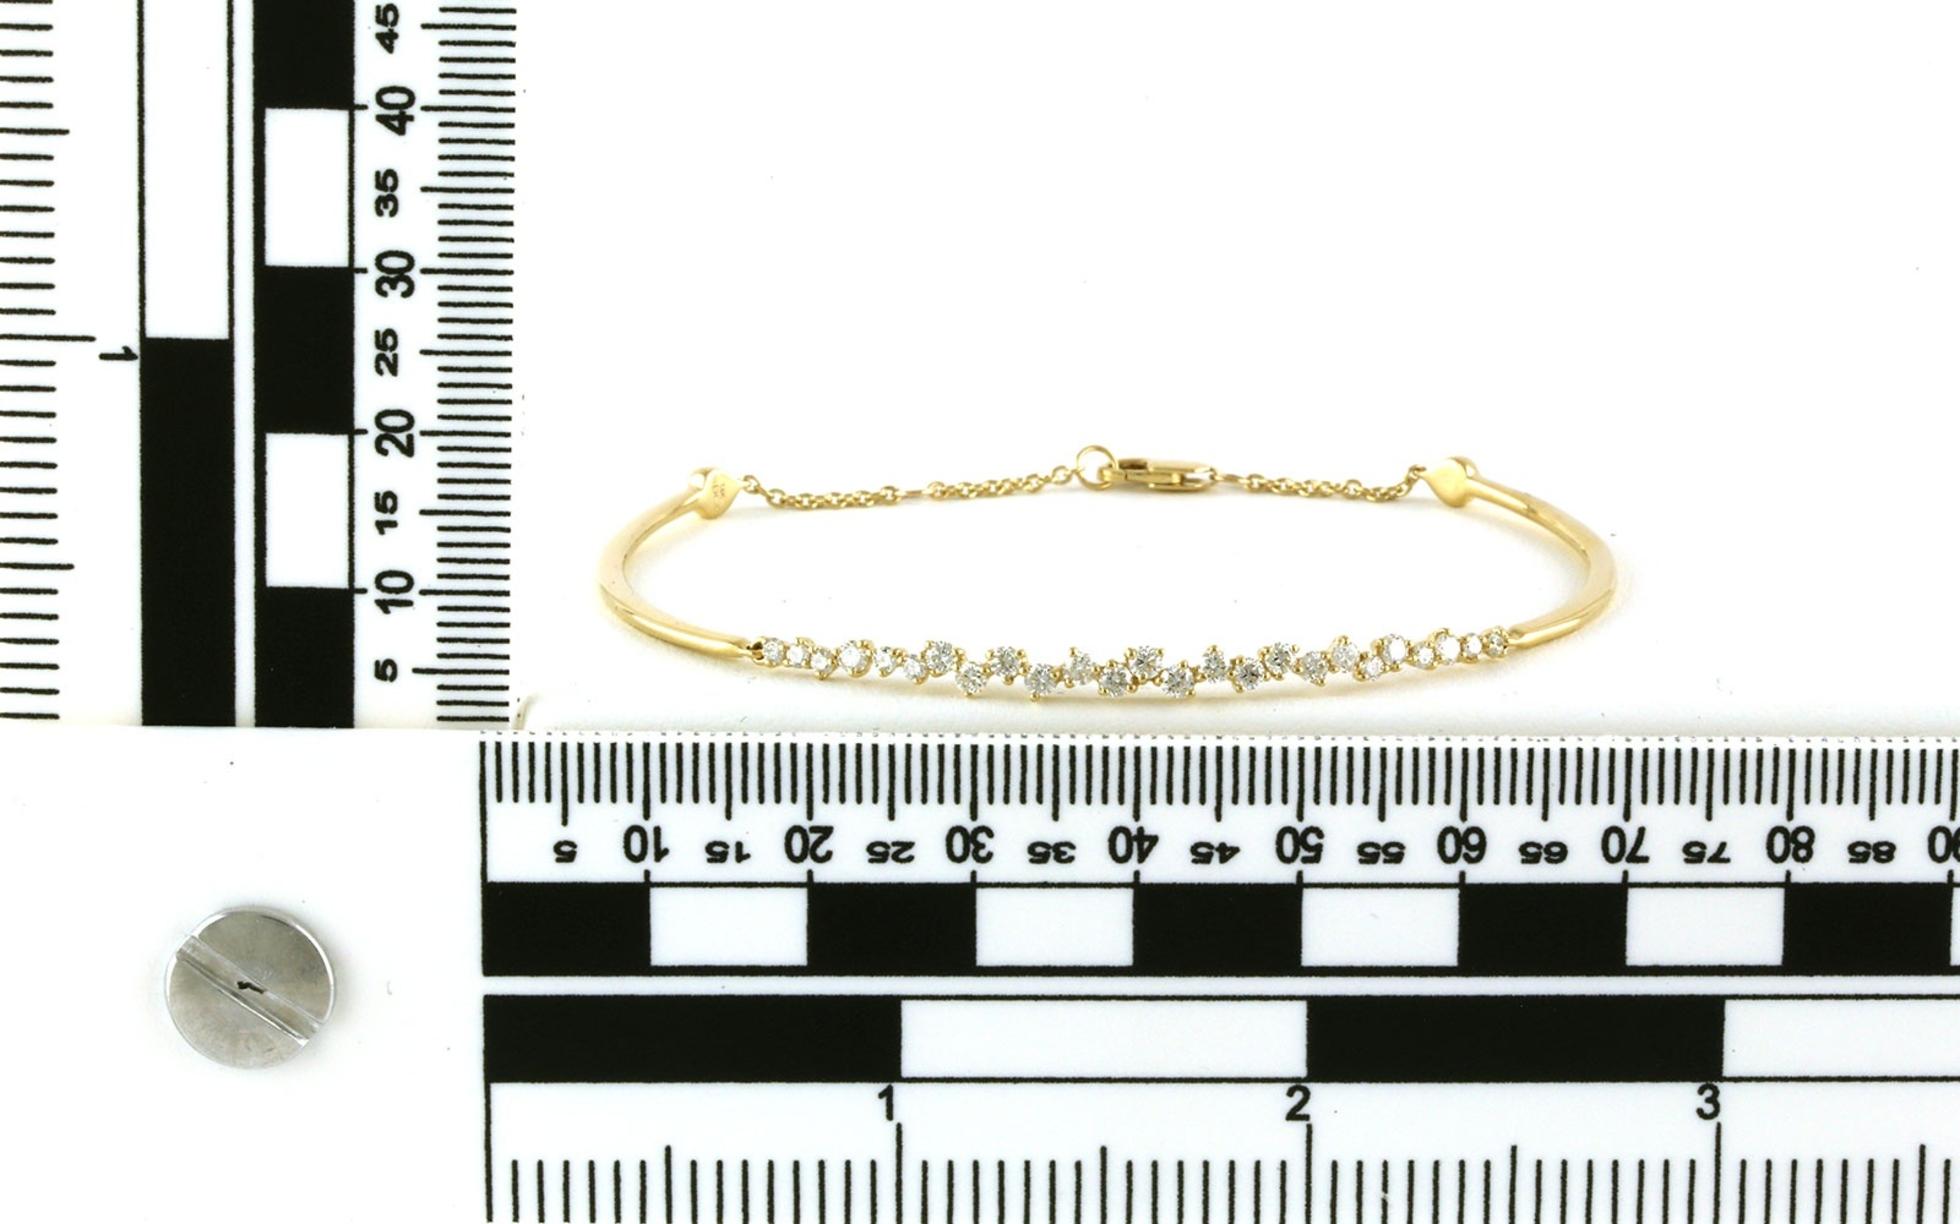 Zig-Zag Diamond Segmented Bangle Bracelet in Yellow Gold (0.63cts TWT) scale